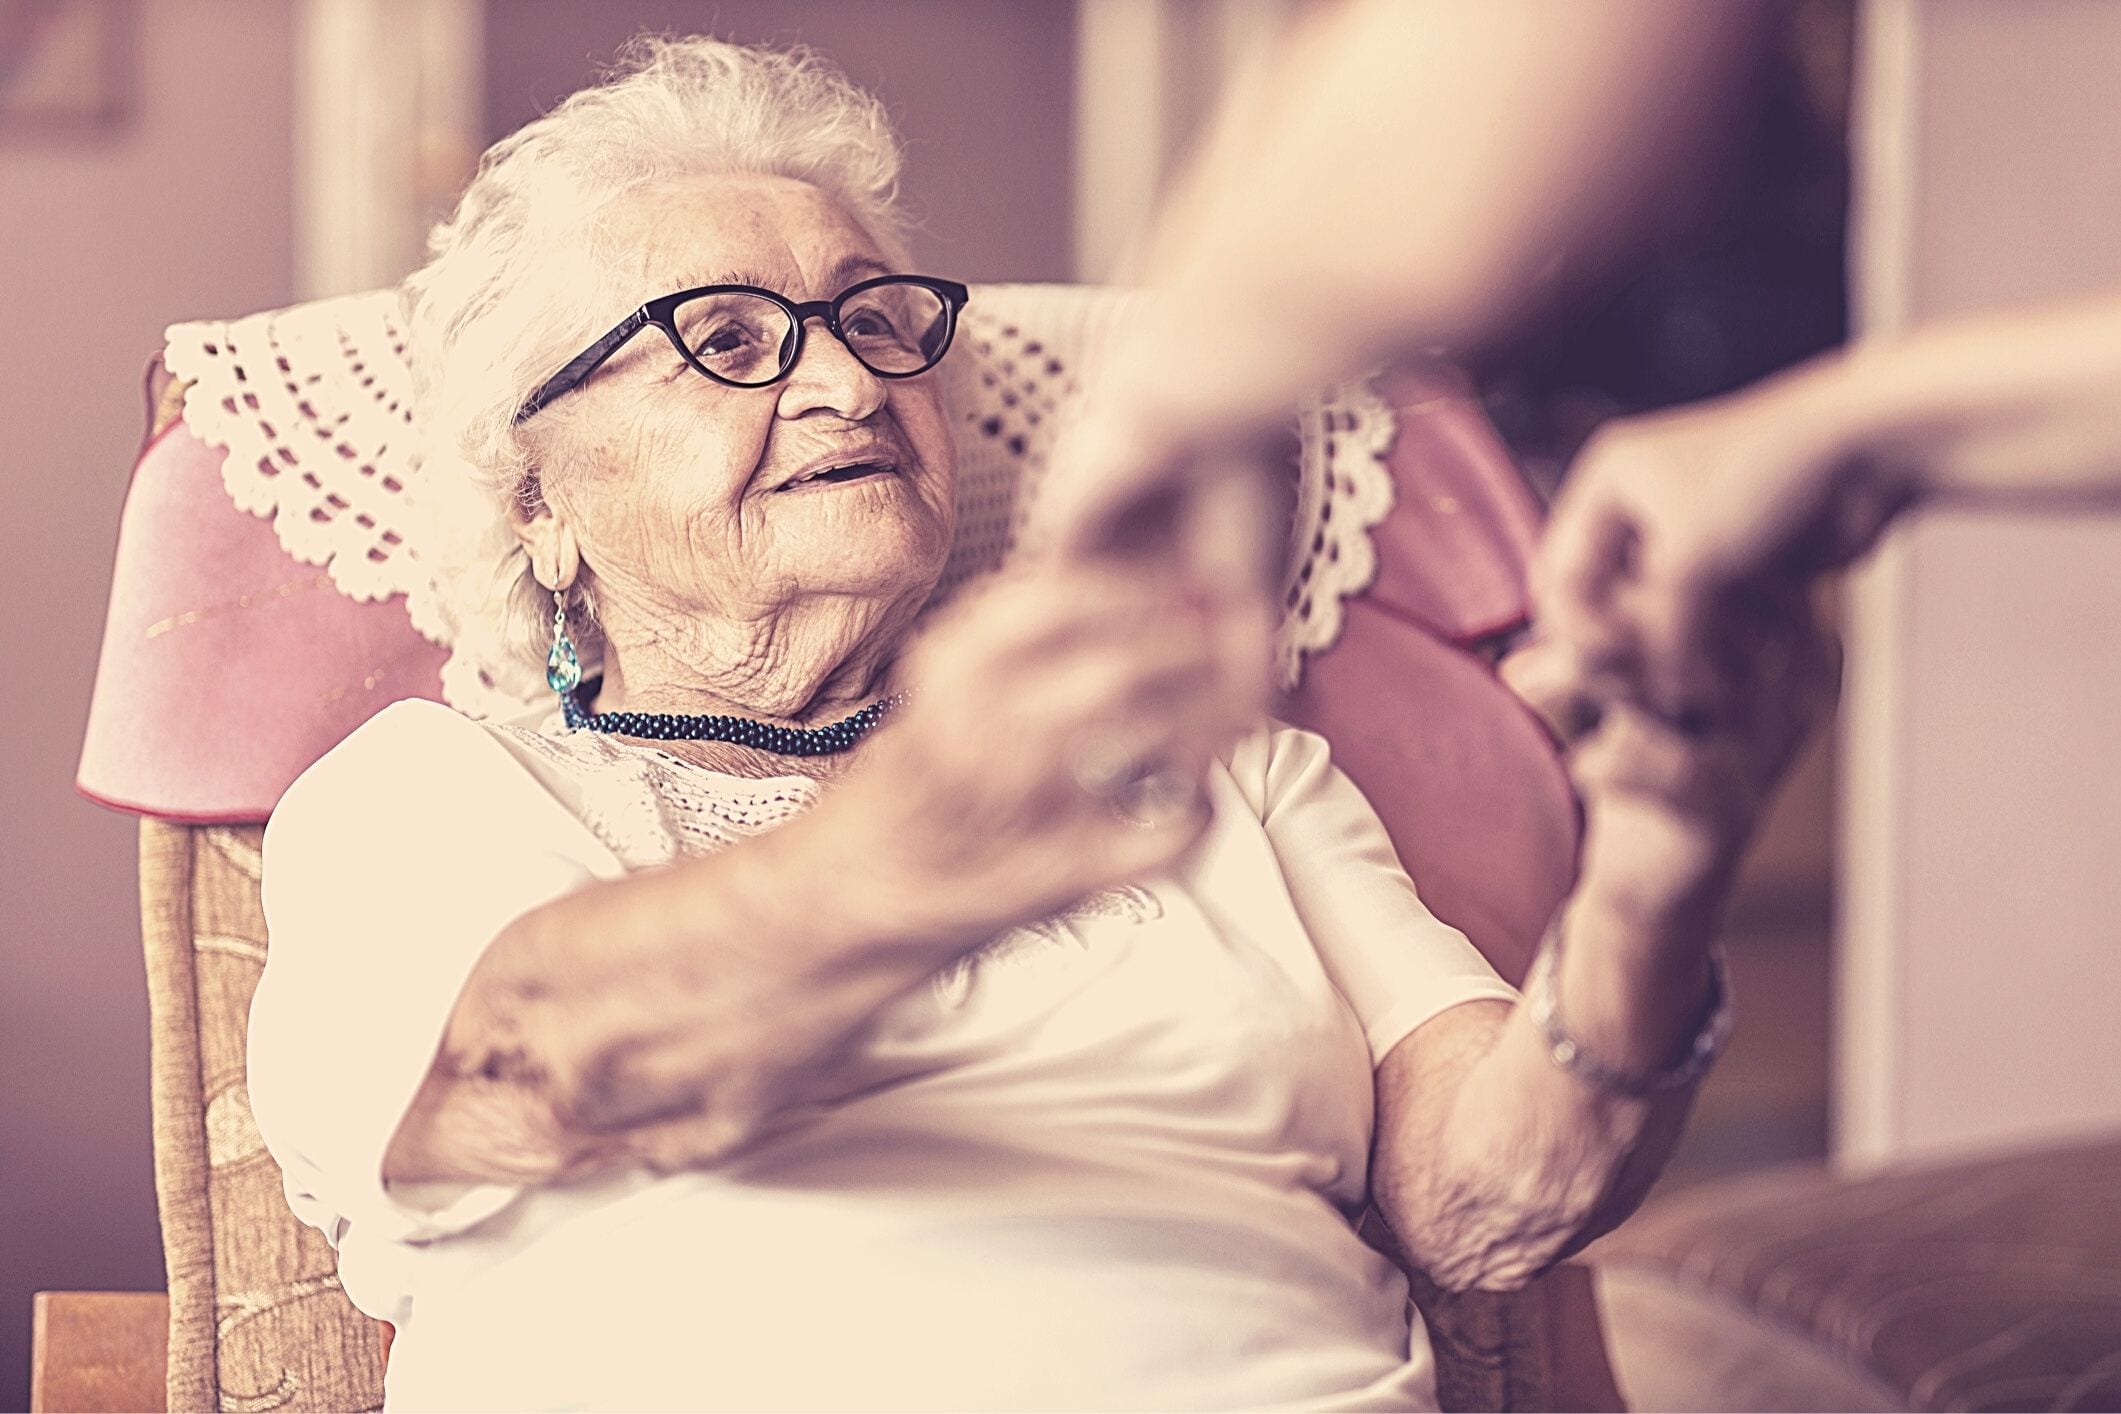 Home carer helping older woman